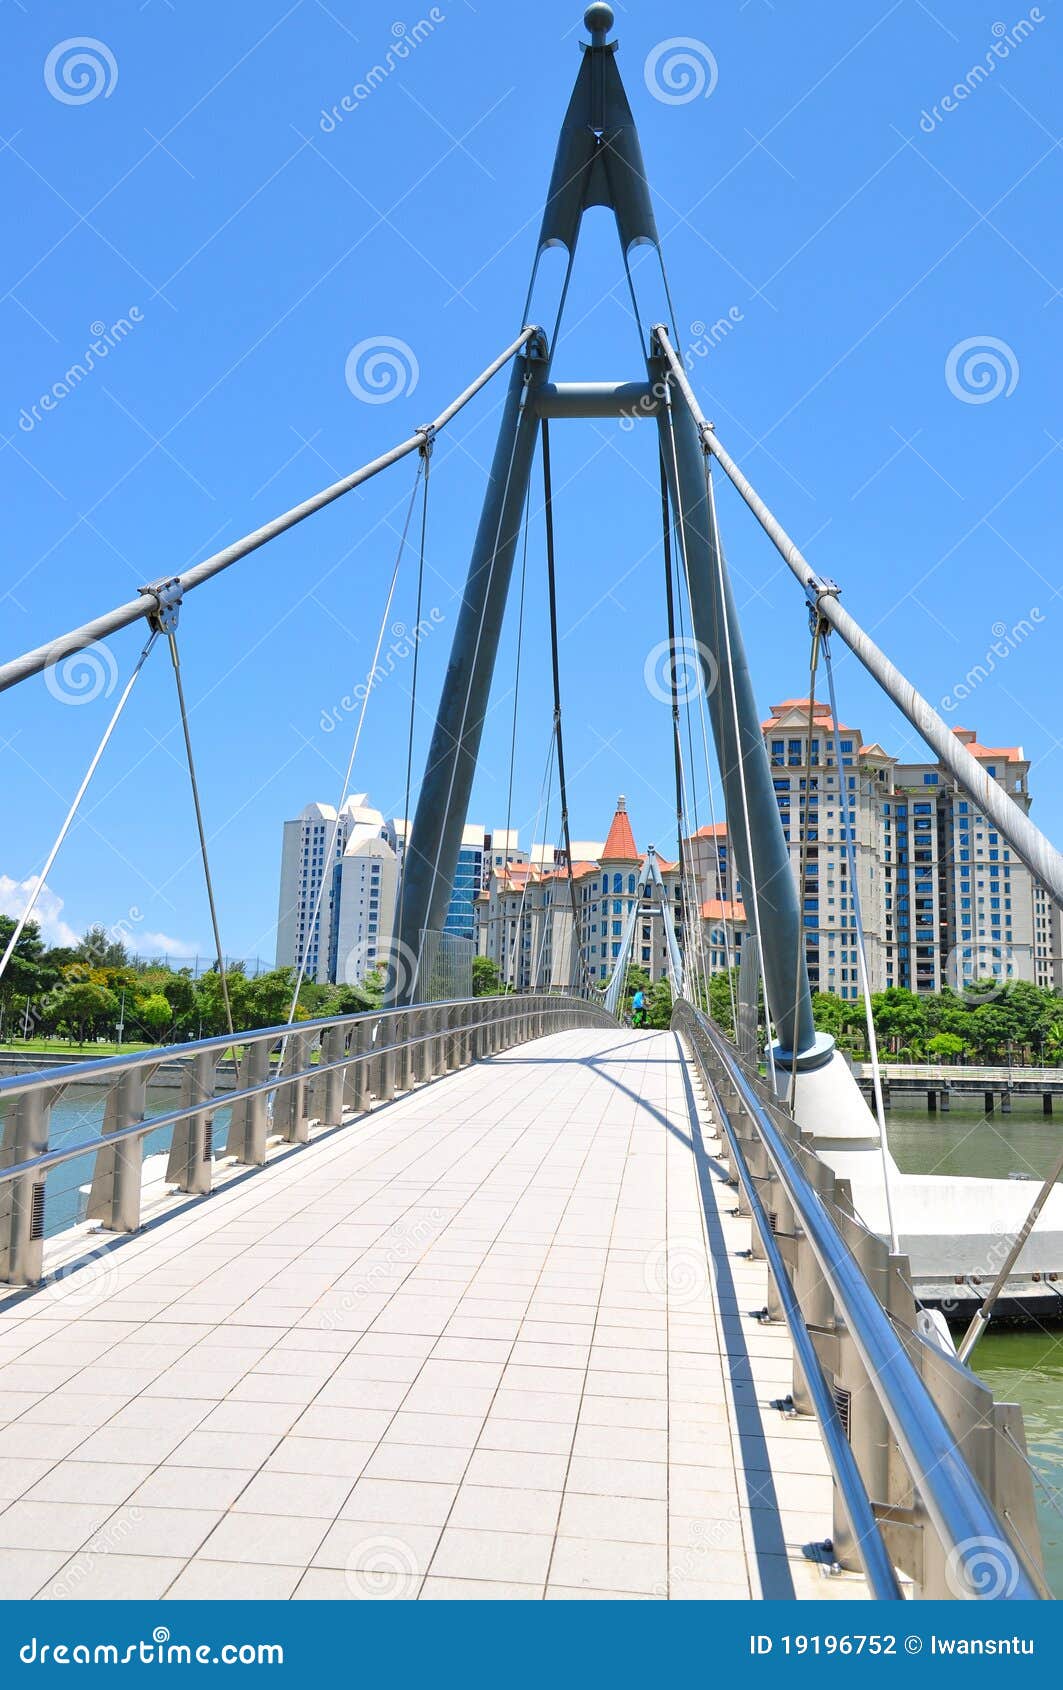 tanjong rhu suspension bridge